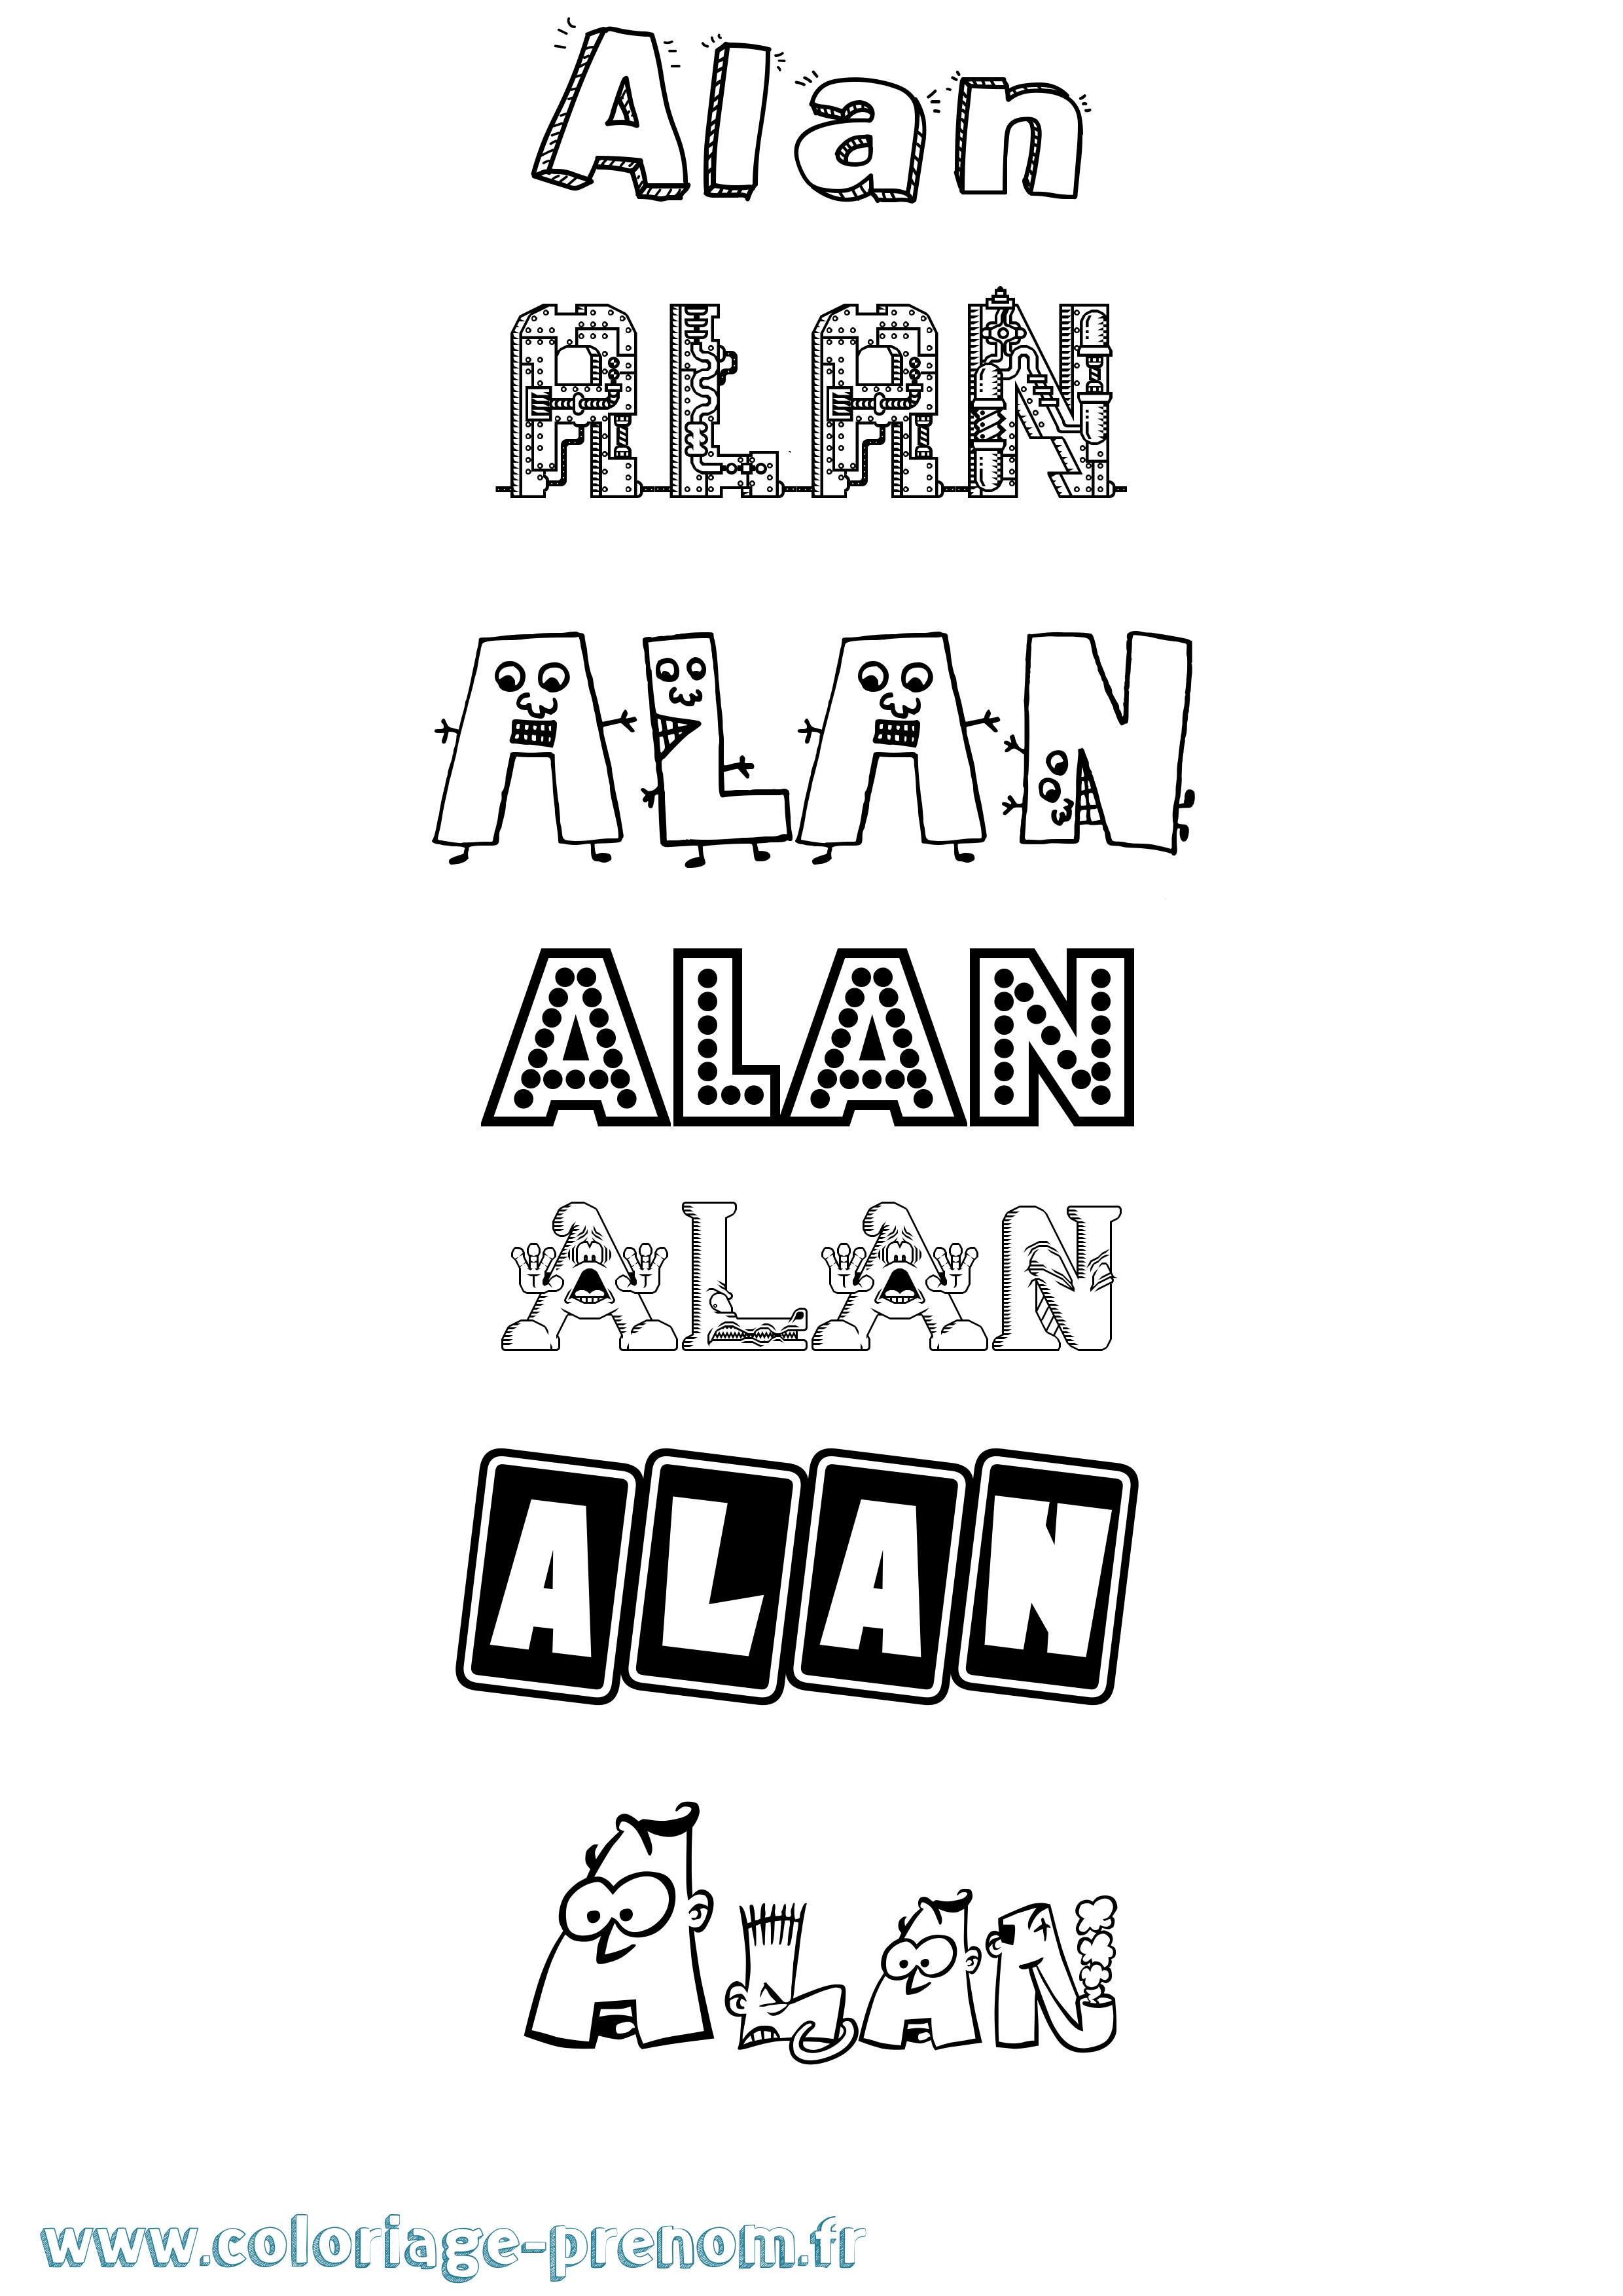 Coloriage prénom Alan